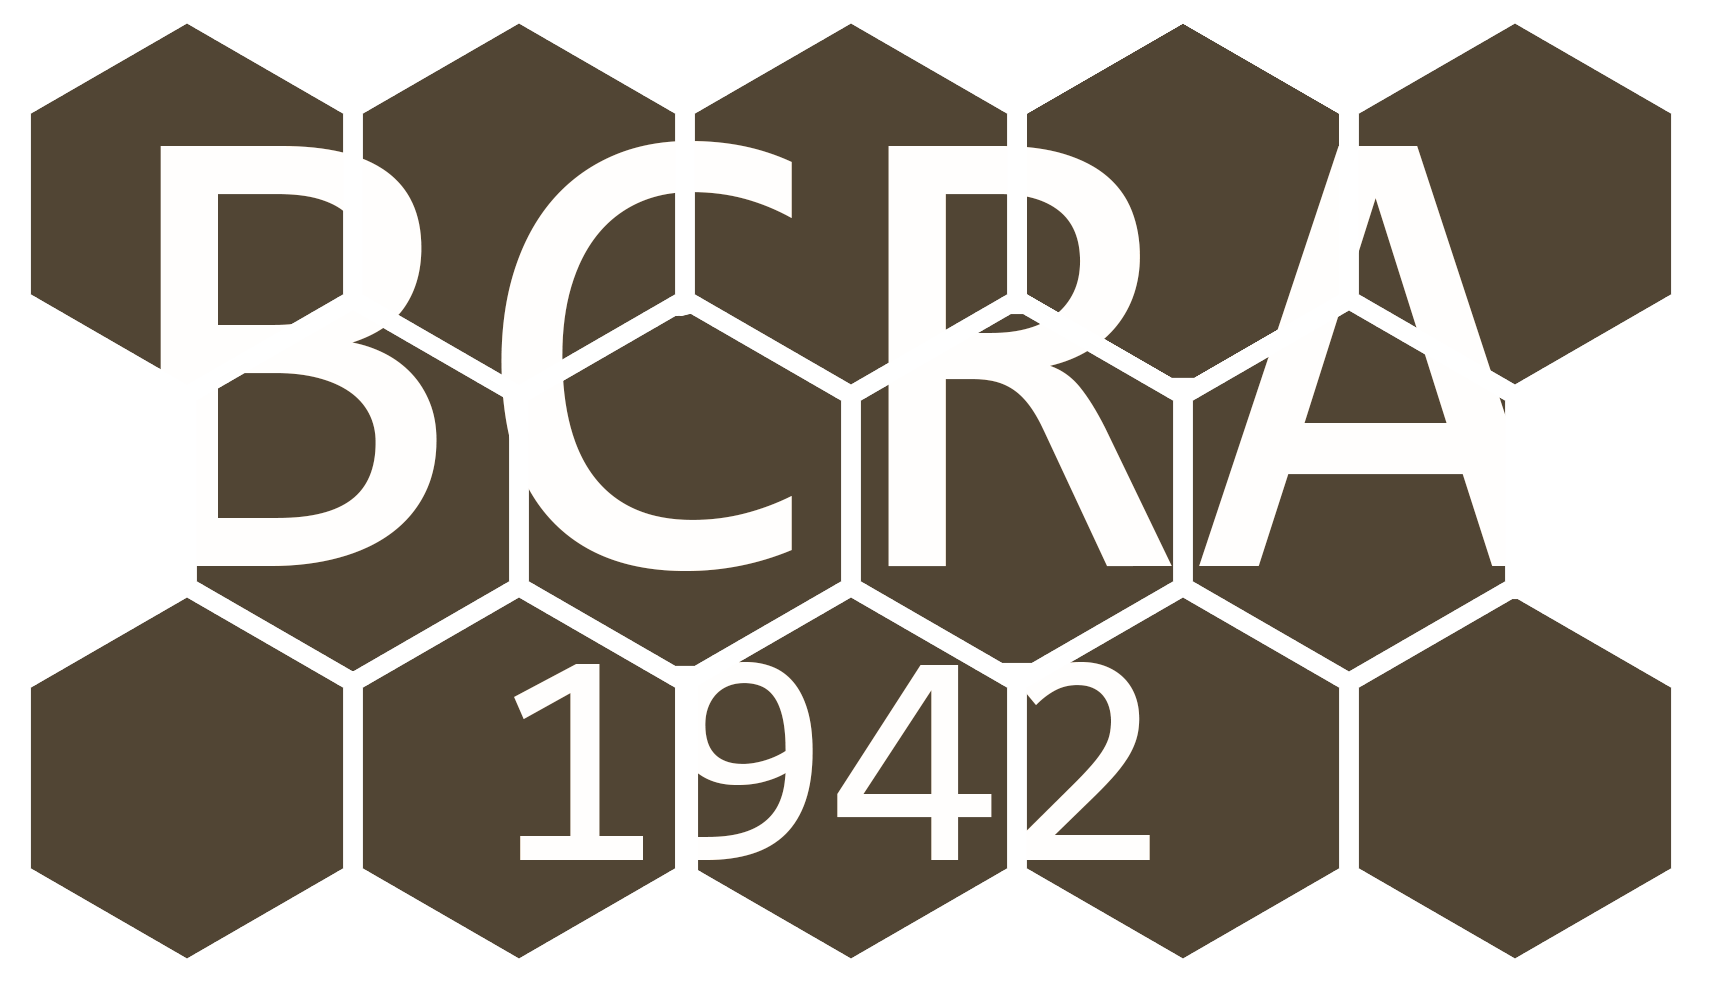 BCRA Letters